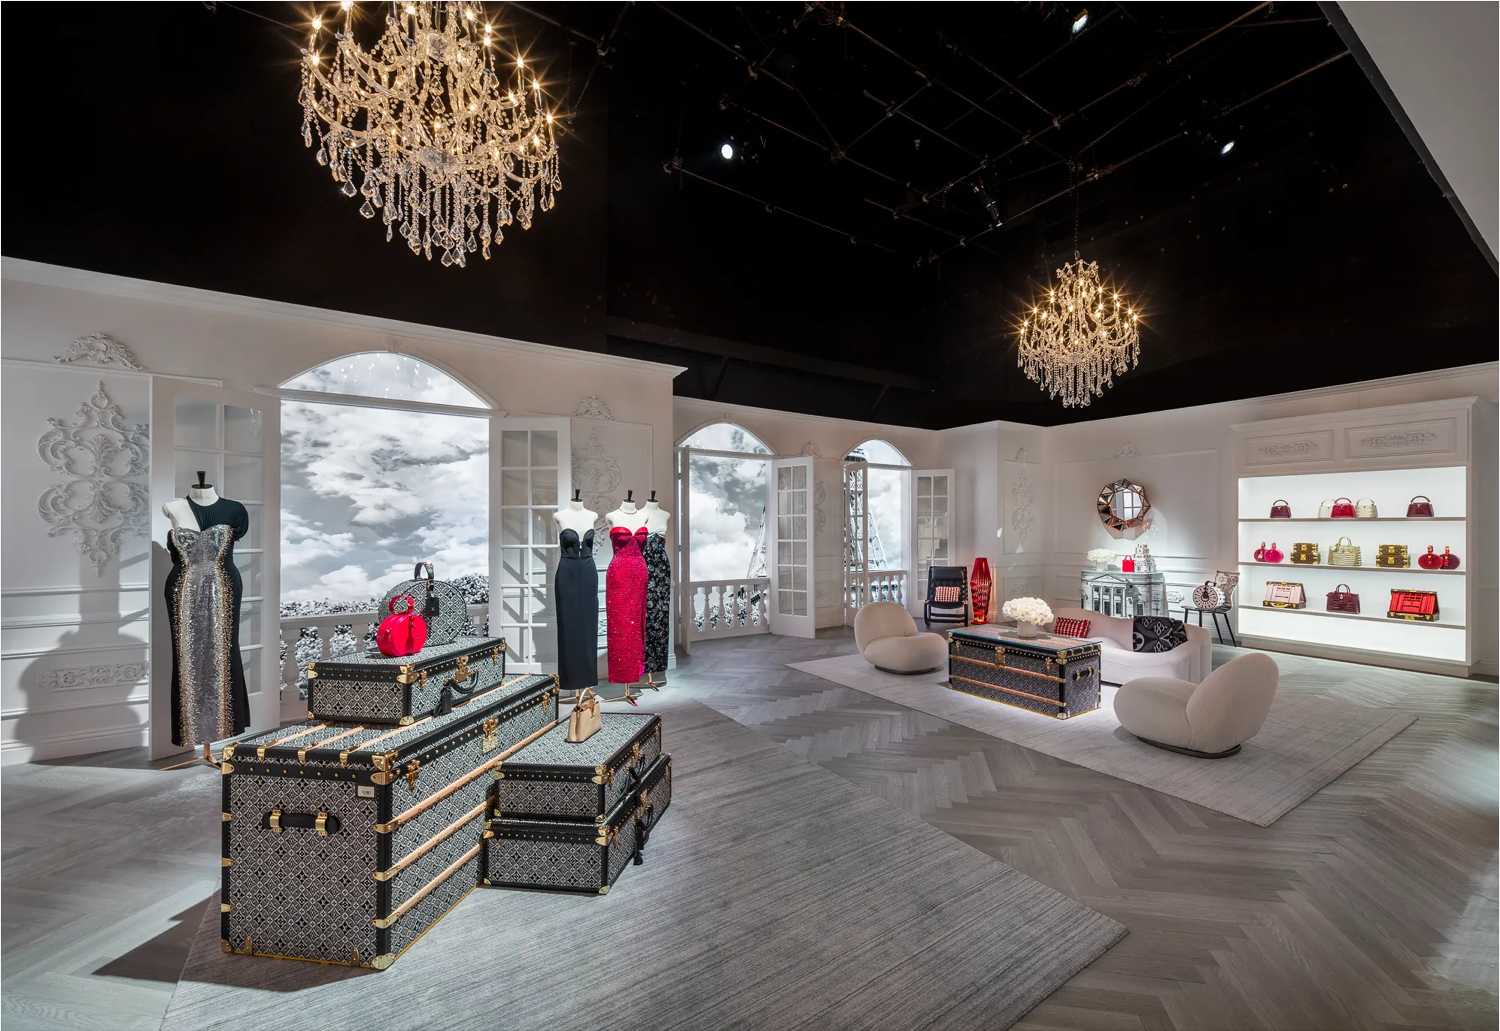 Los Angeles: Louis Vuitton pop-up store, superfuture®